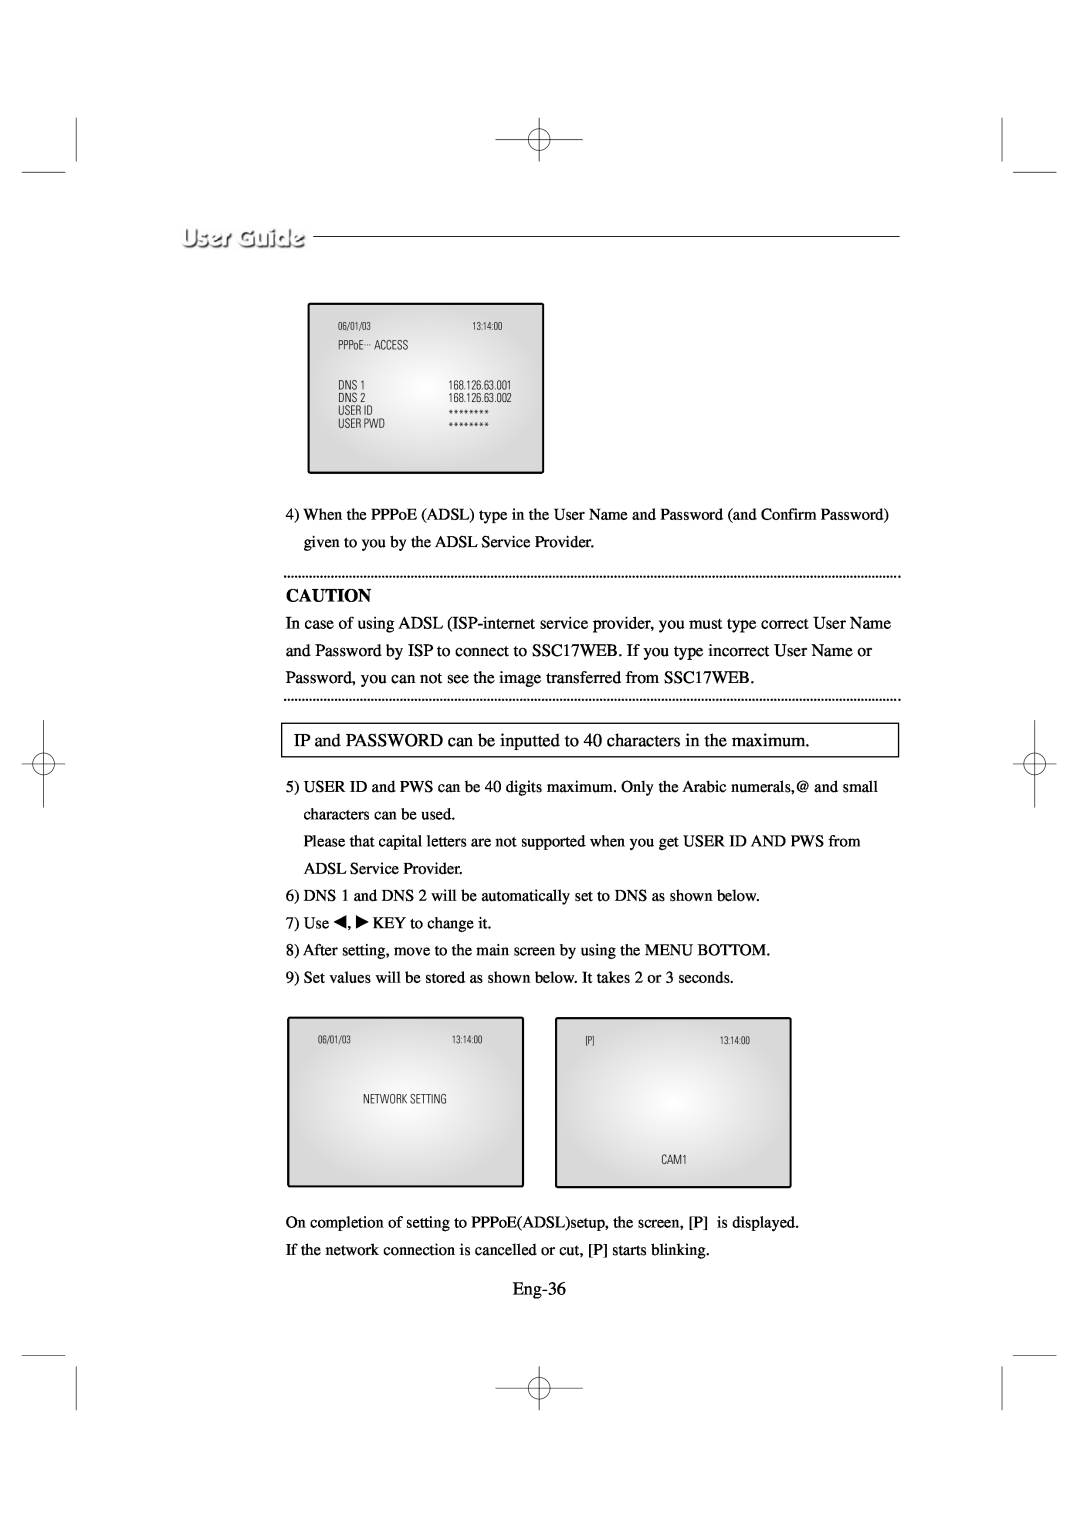 Samsung SSC17WEB manual Eng-36 